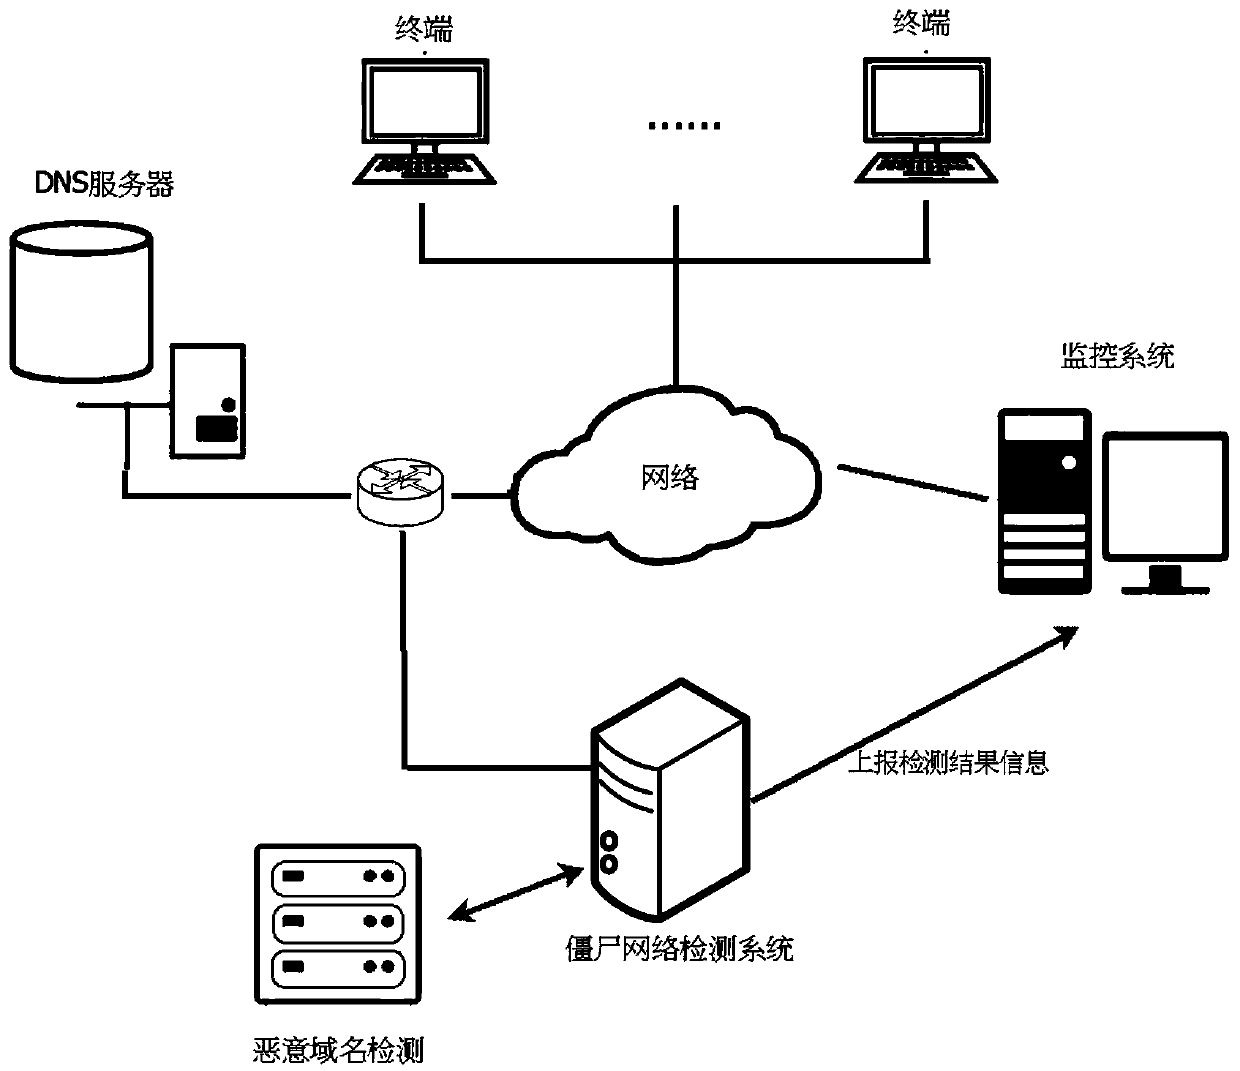 Botnet detection method and system and storage medium